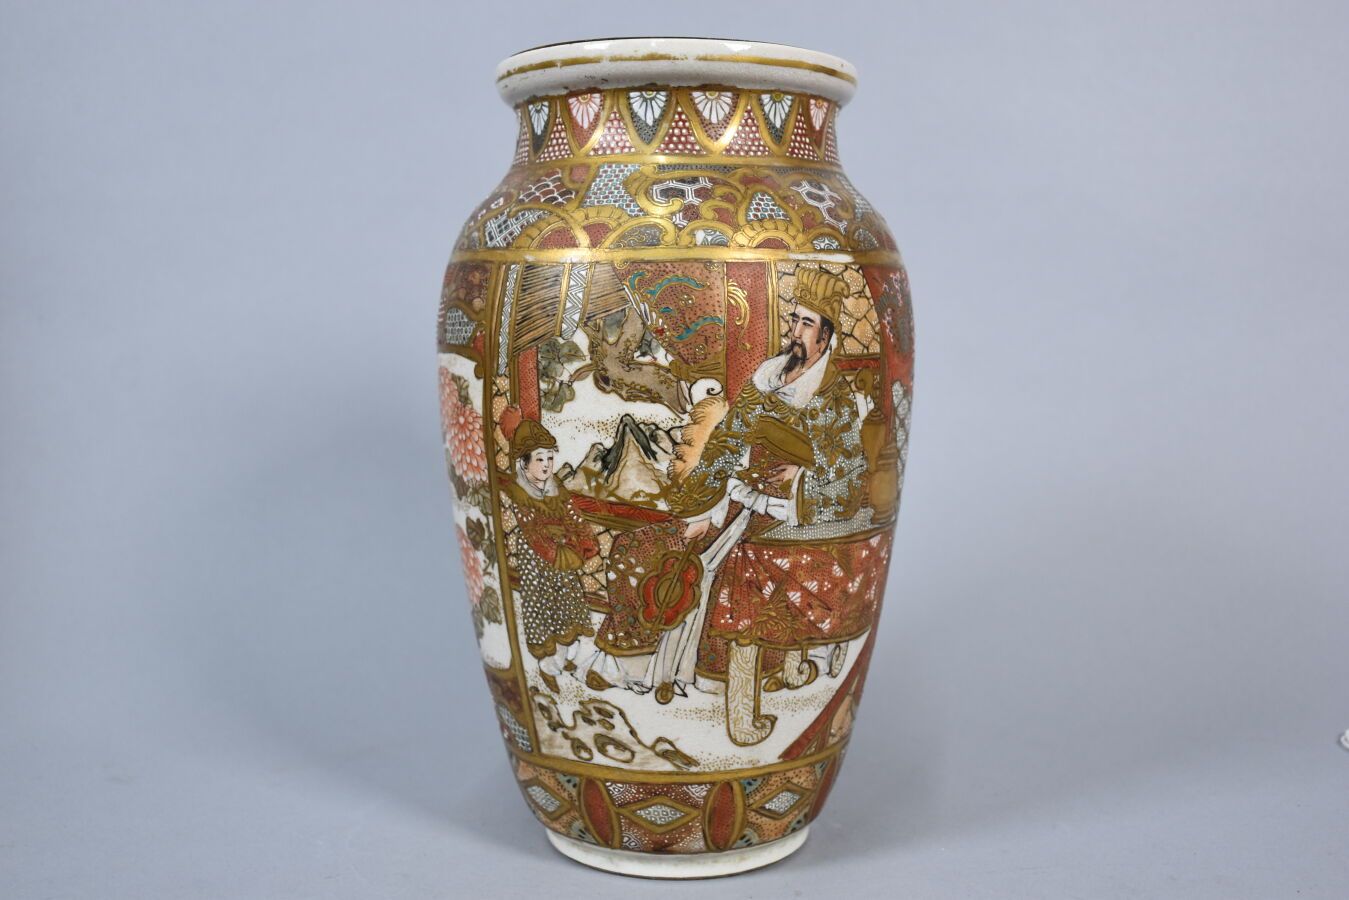 Null 日本STASUMA公司

一对战士装饰的瓷器花瓶

高度27厘米